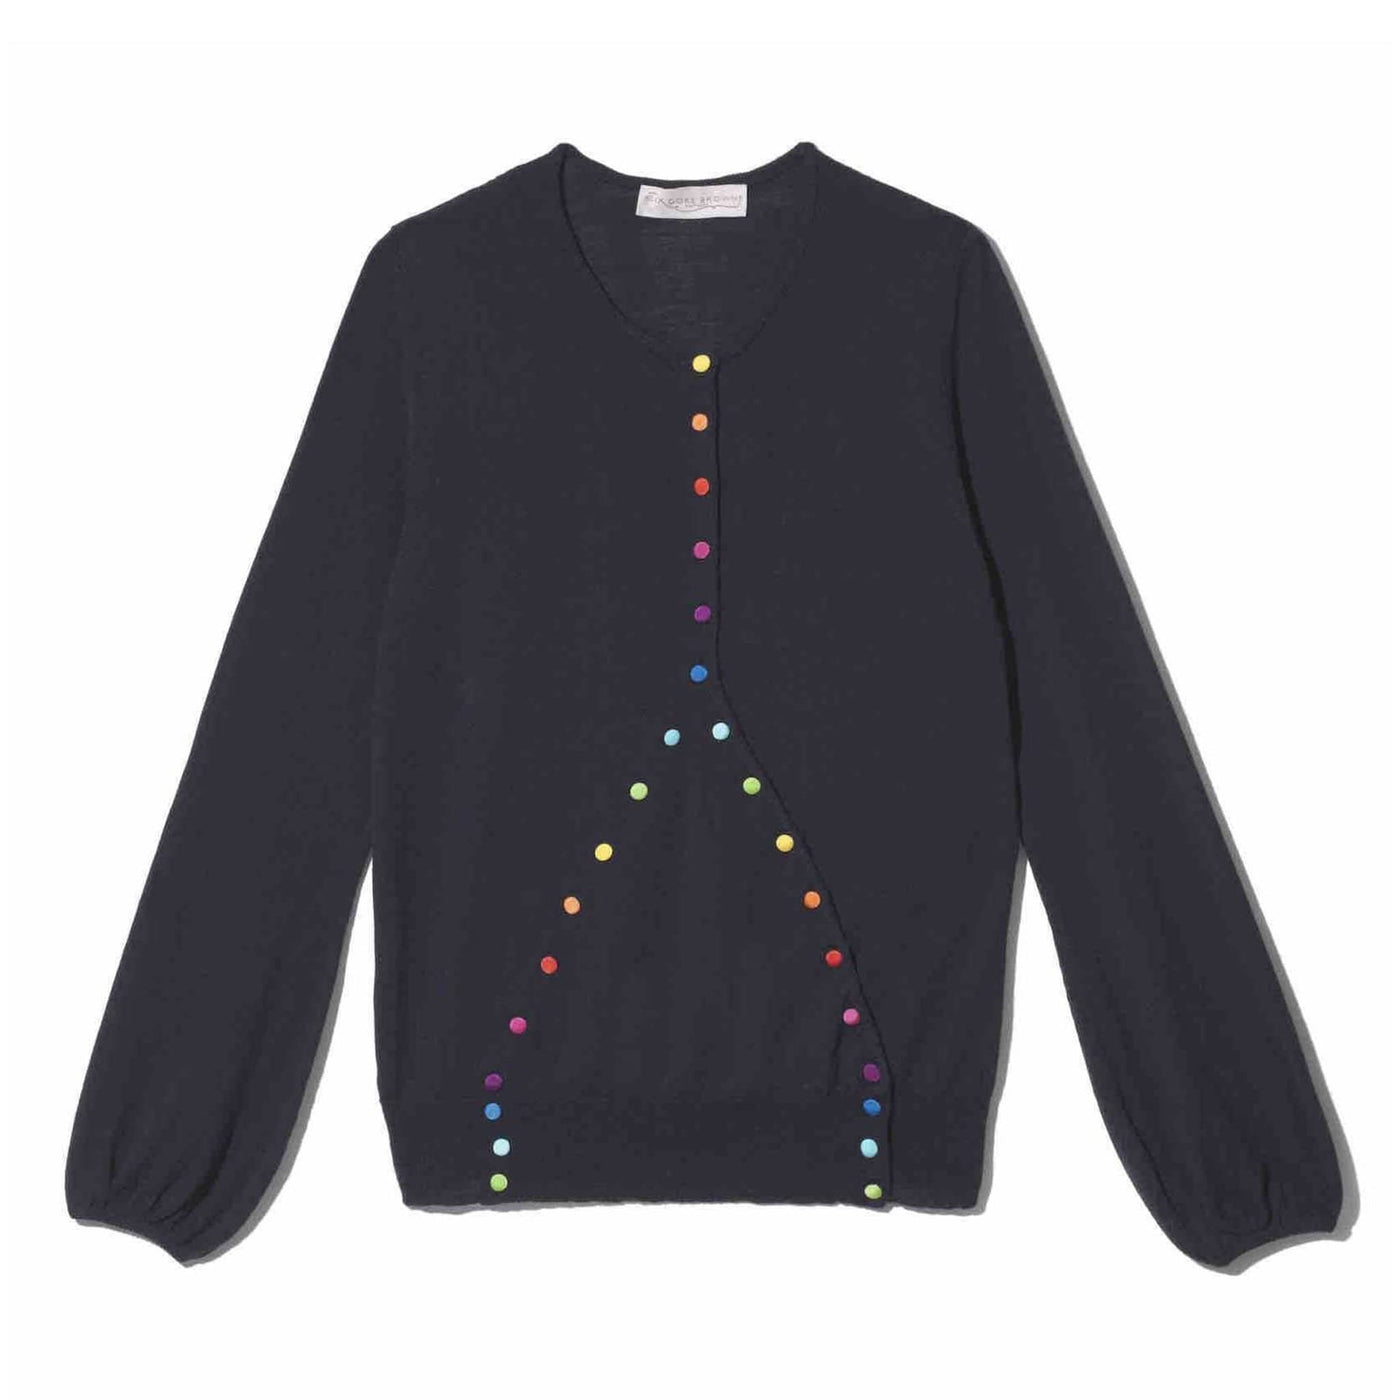 Black Rainbow Criss Cross sweater